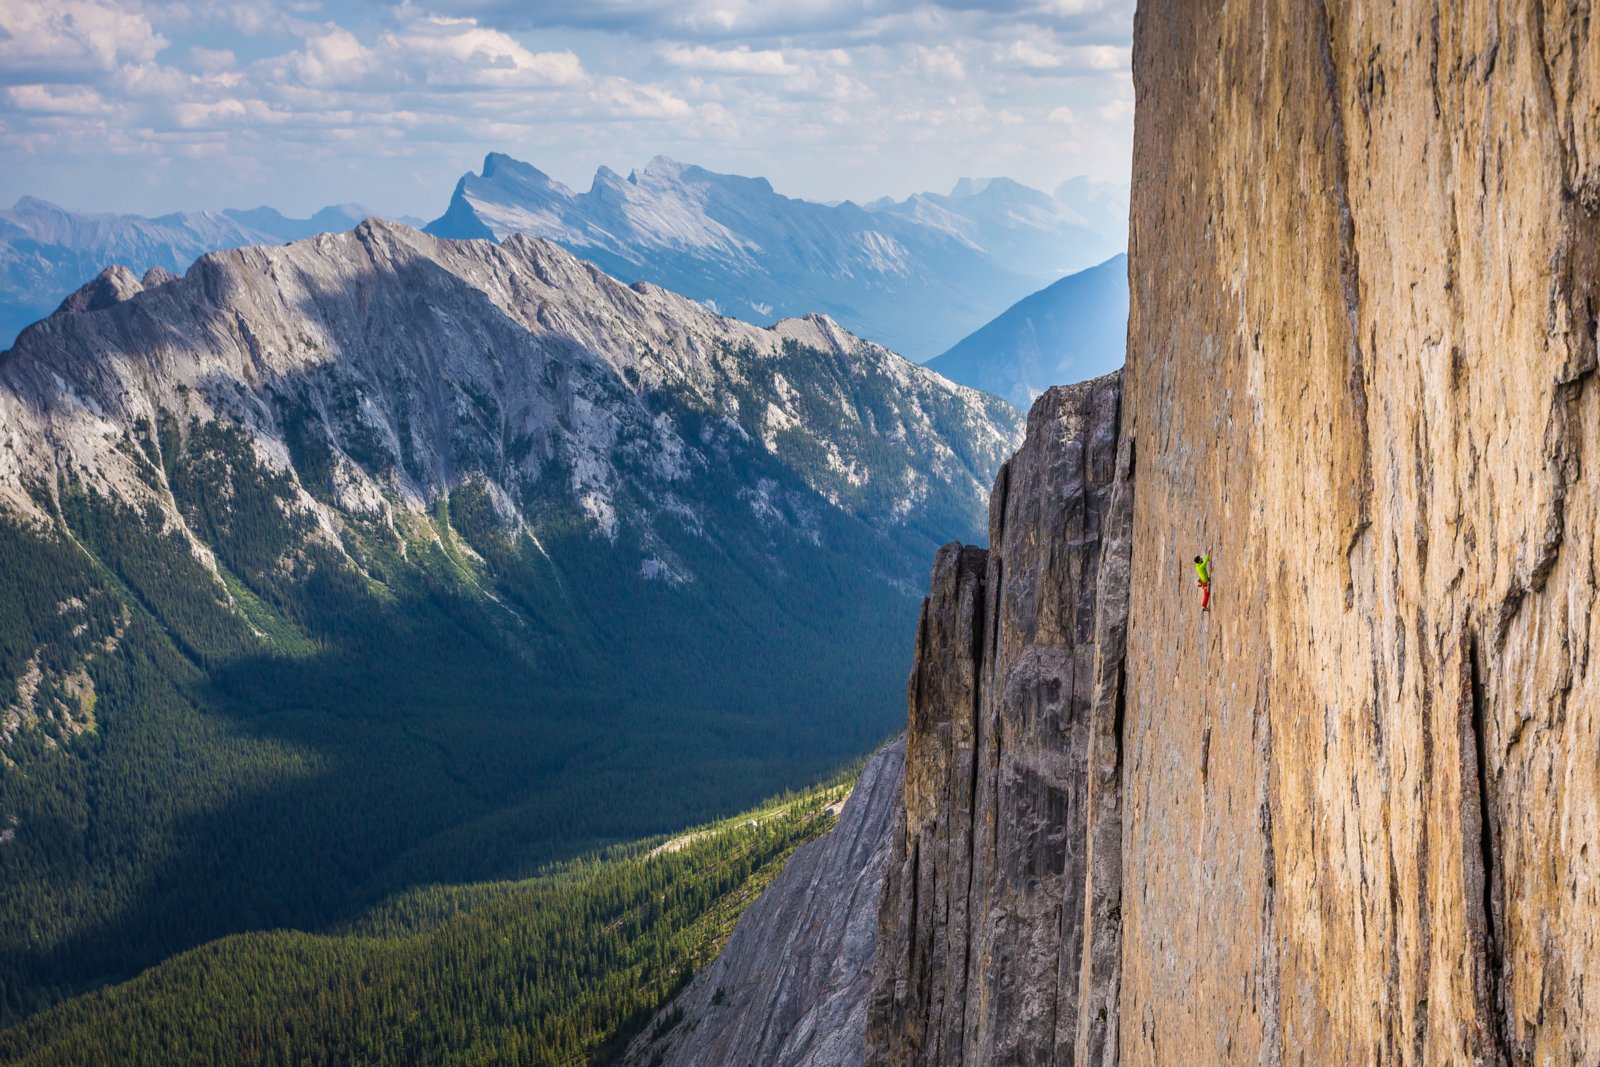 Far away shot of a rock climber of a flat mountain headwall with a mountain view.